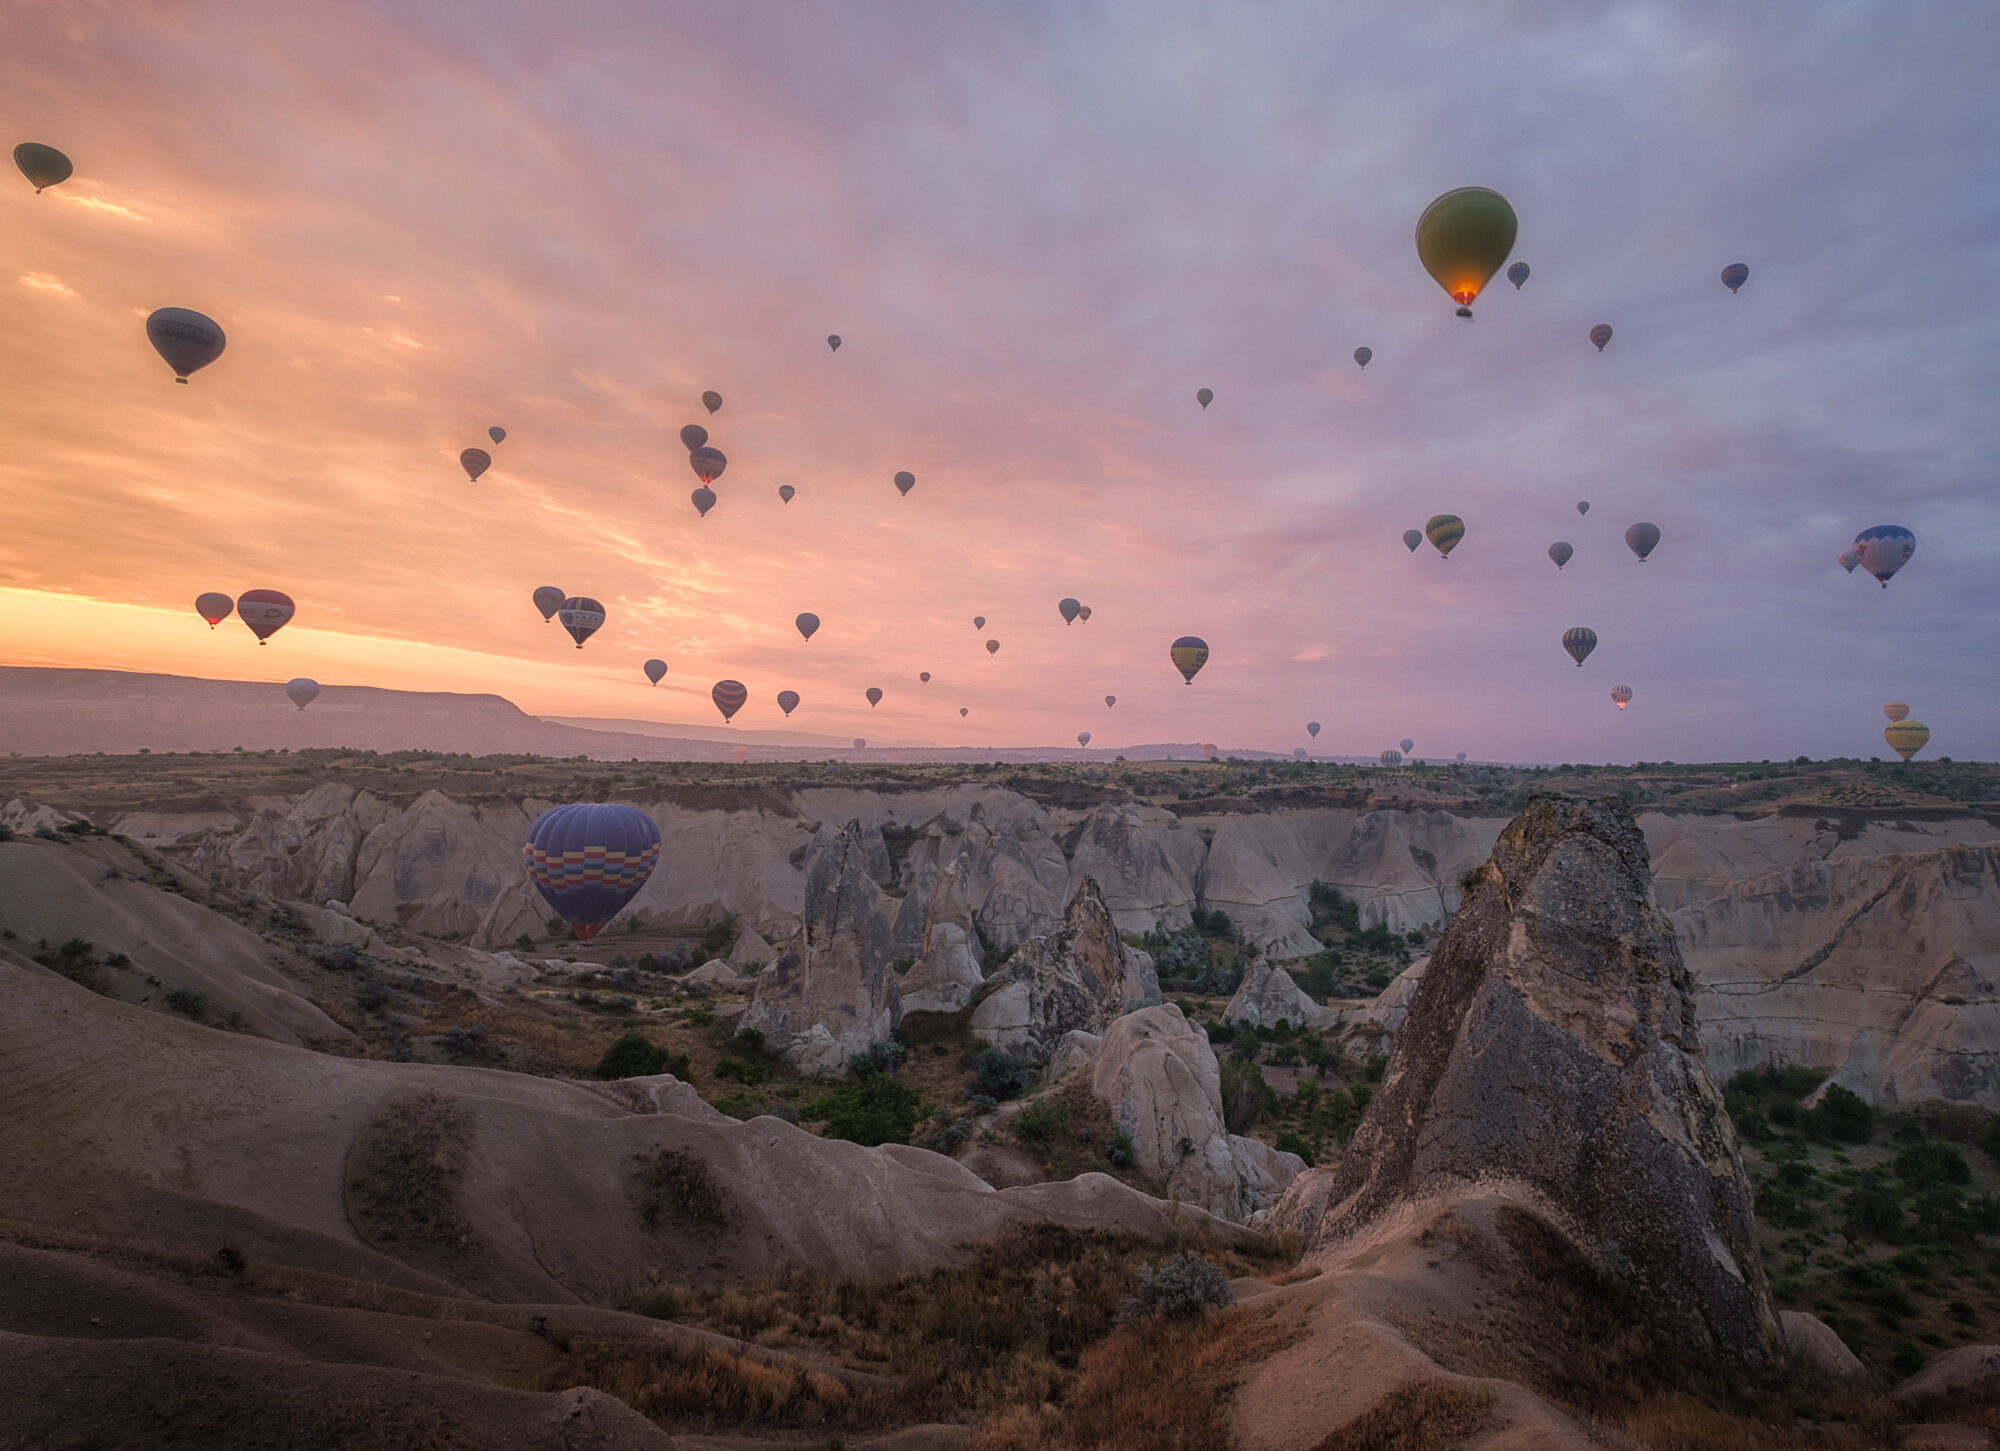 cappadocia-turky-hot-air-balloons.jpg